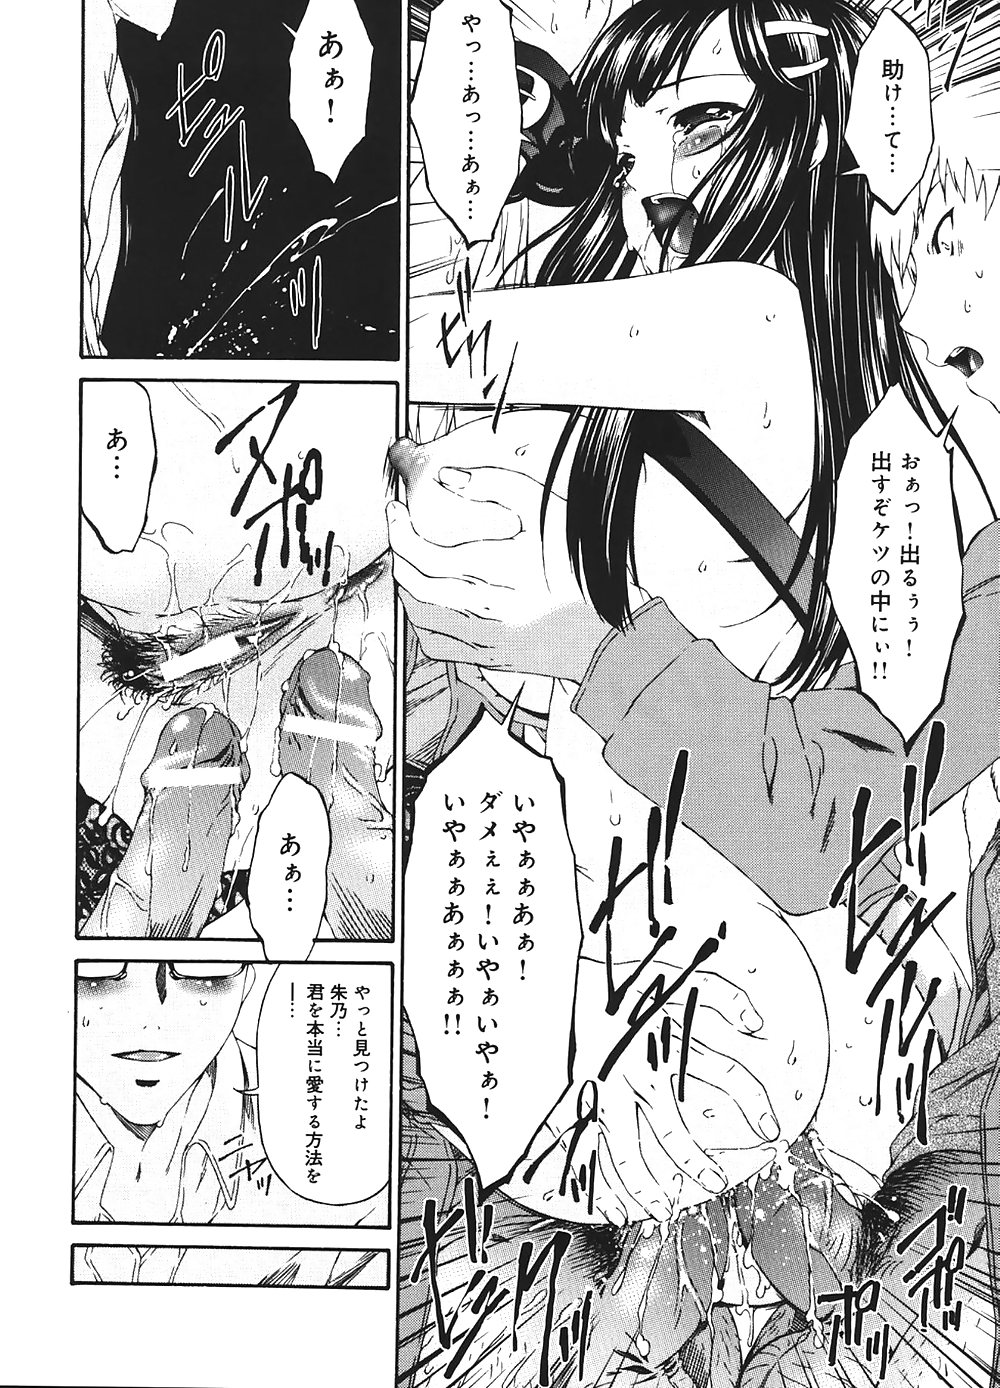 0150- (Manga) Bai Asuka Hentai Collection- Inbi Chi Obi #24544256